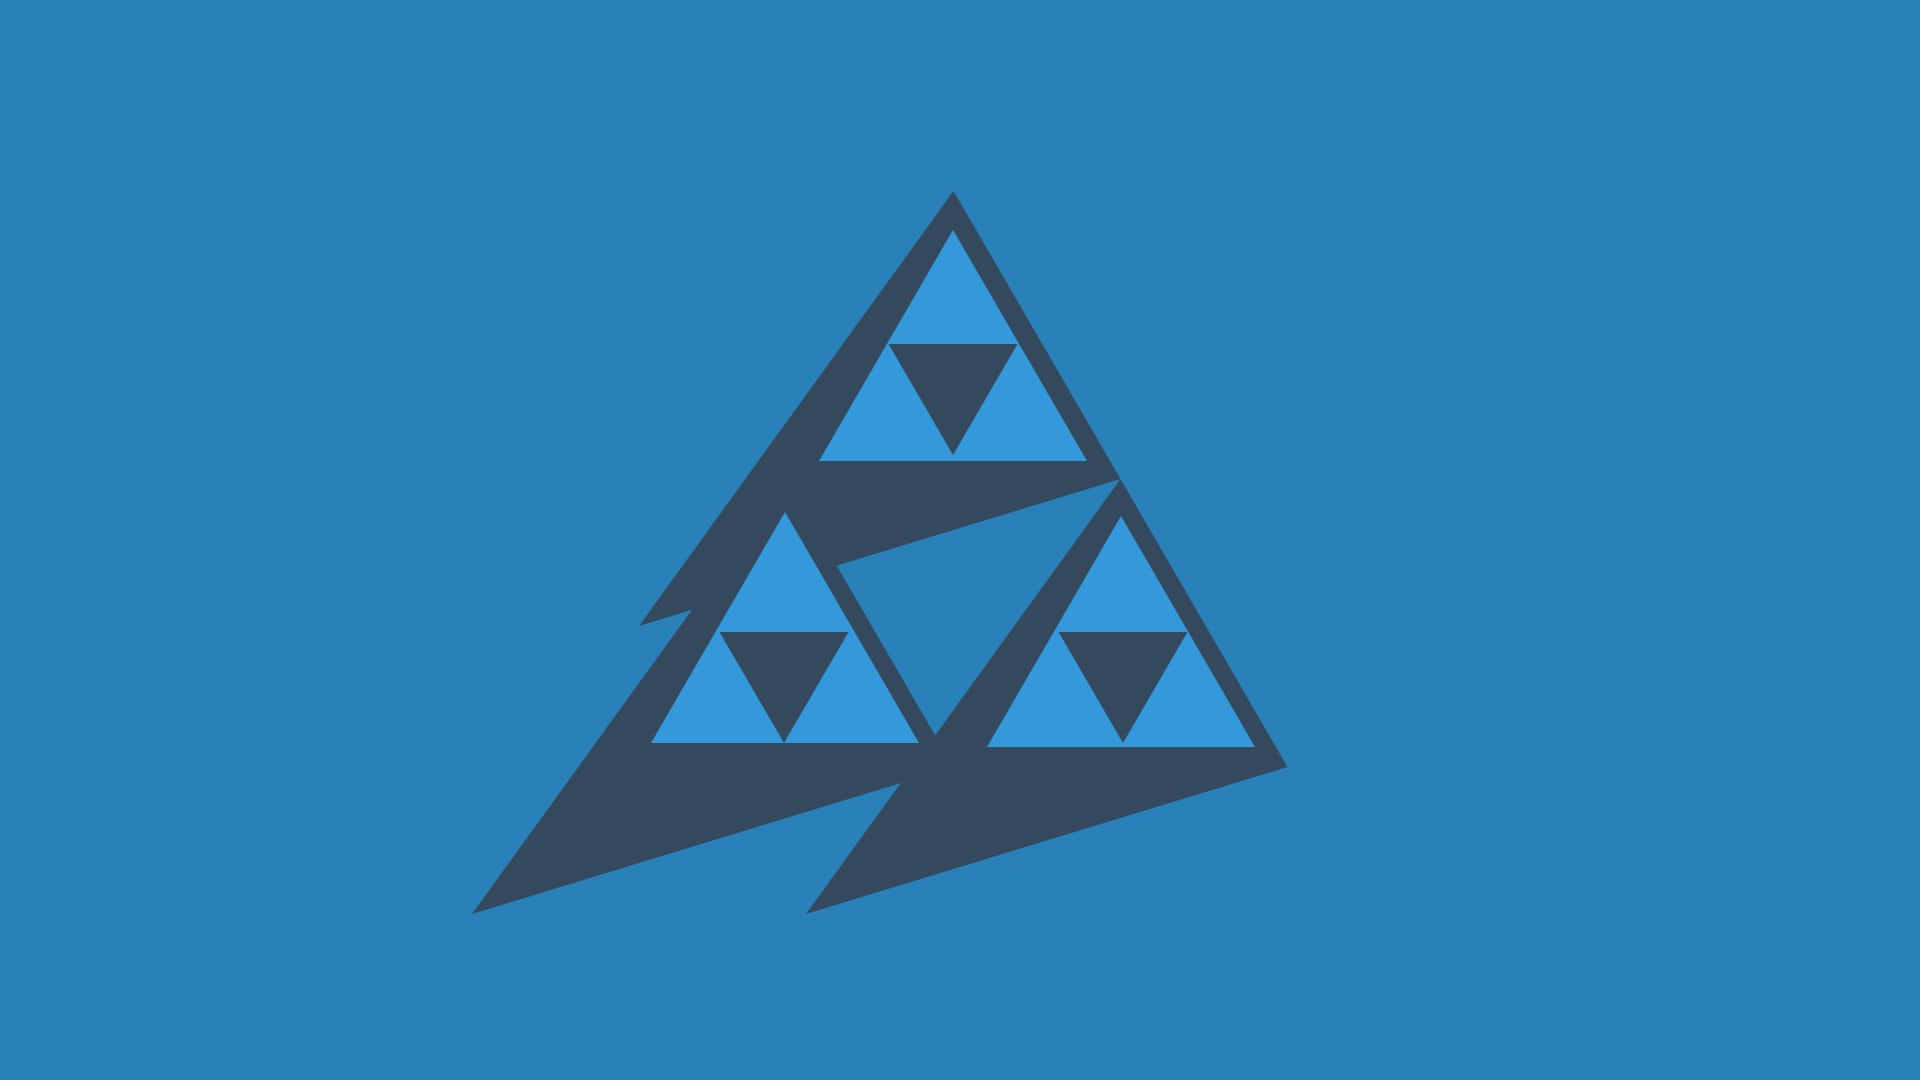 Image The Legendary Triforce Symbol